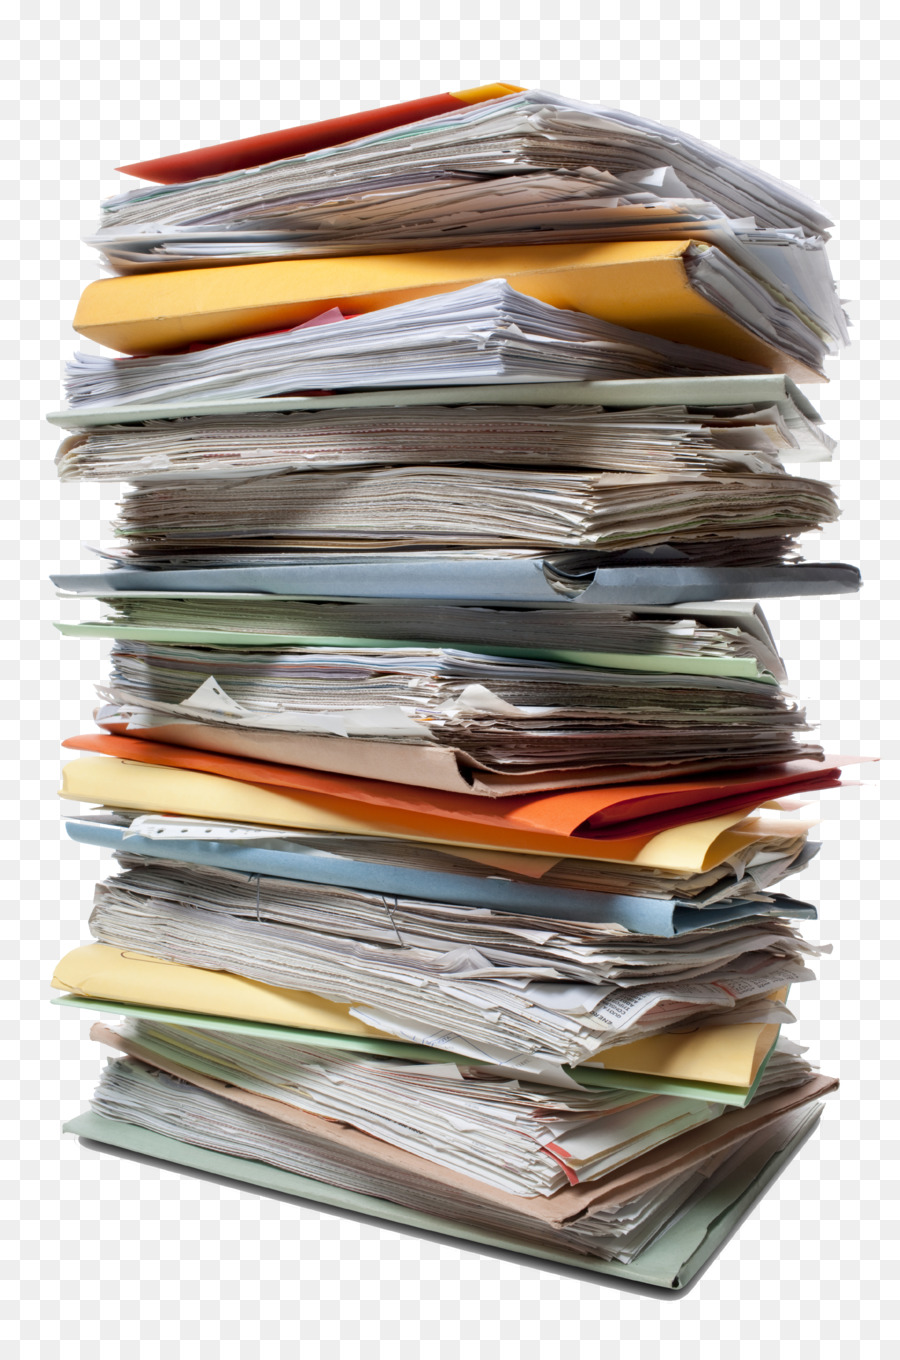 Paper Stack Document Clip art - Pile png download - 1811*2714 - Free Transparent Paper png Download.